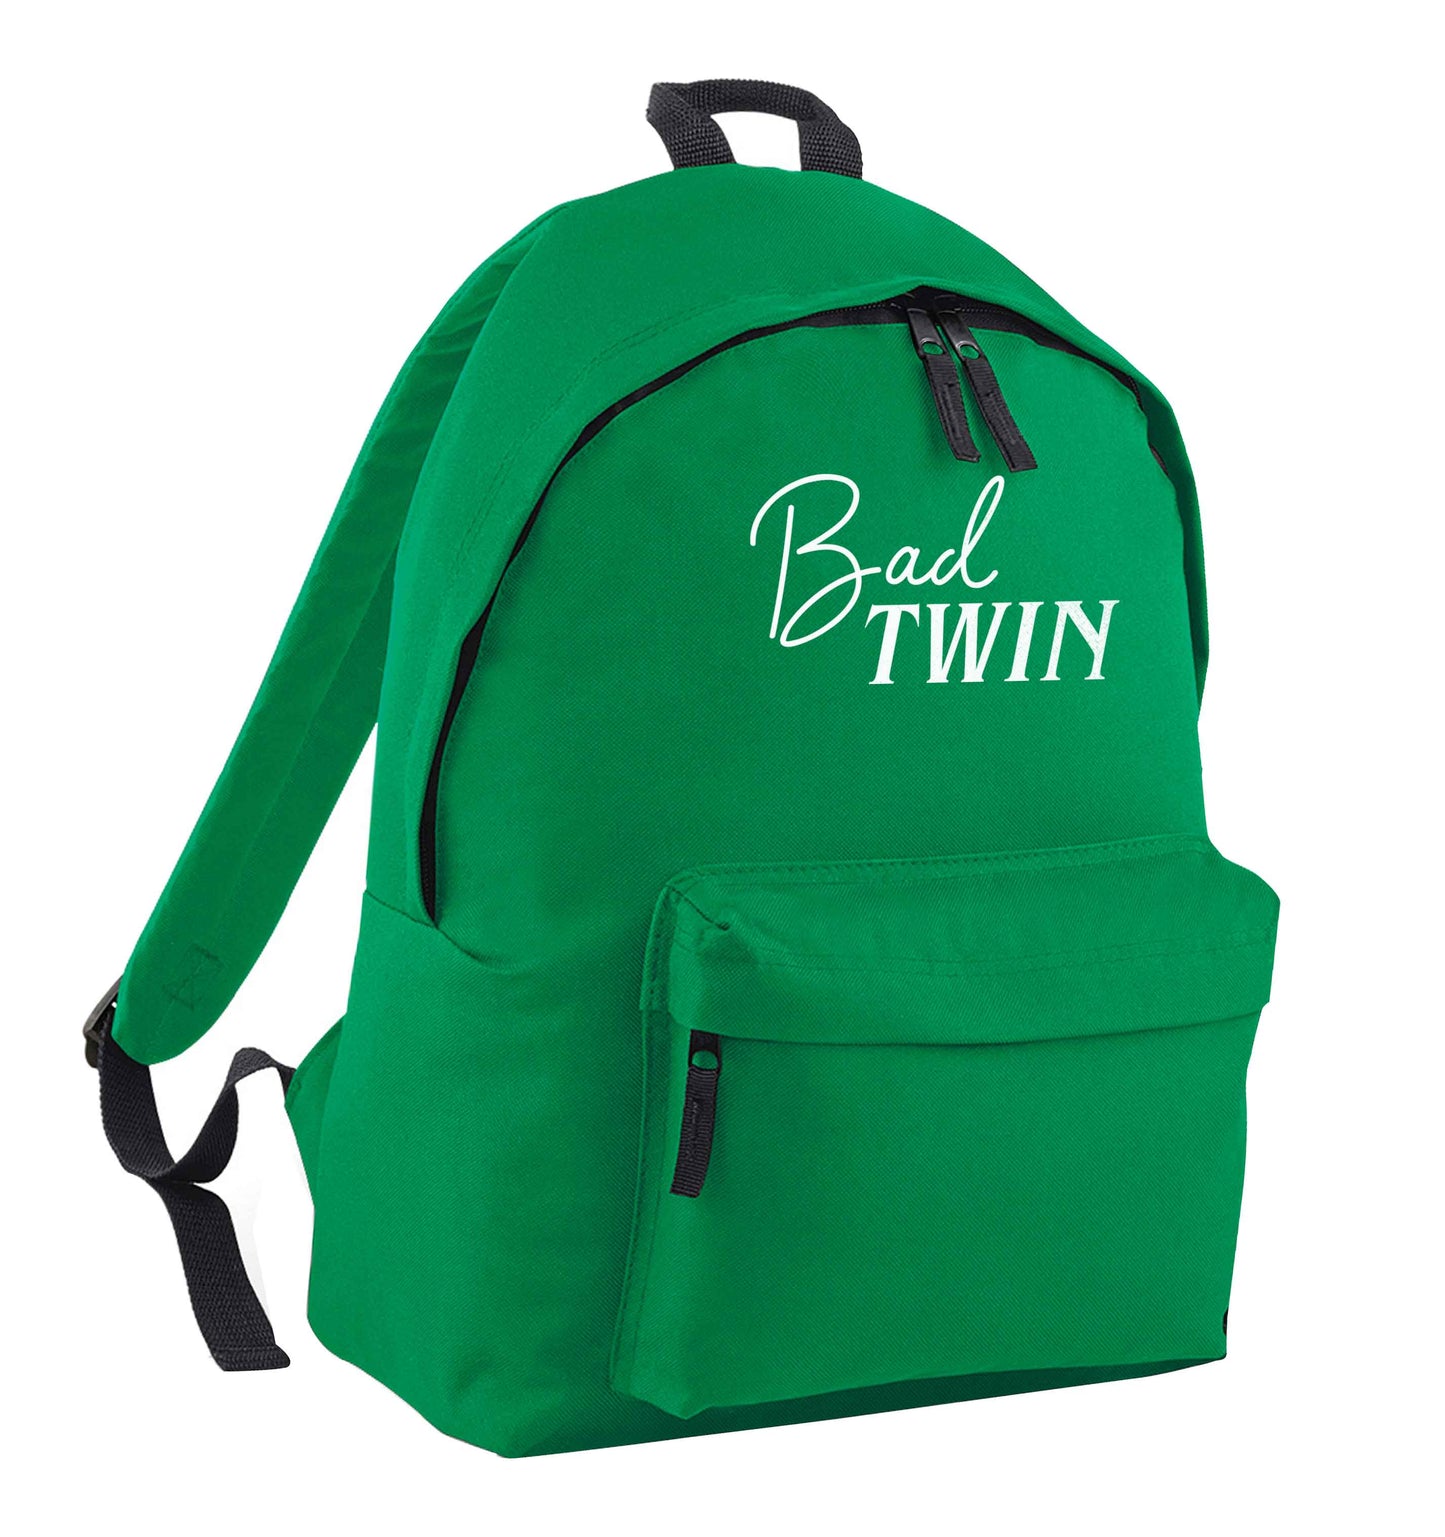 Bad twin green adults backpack